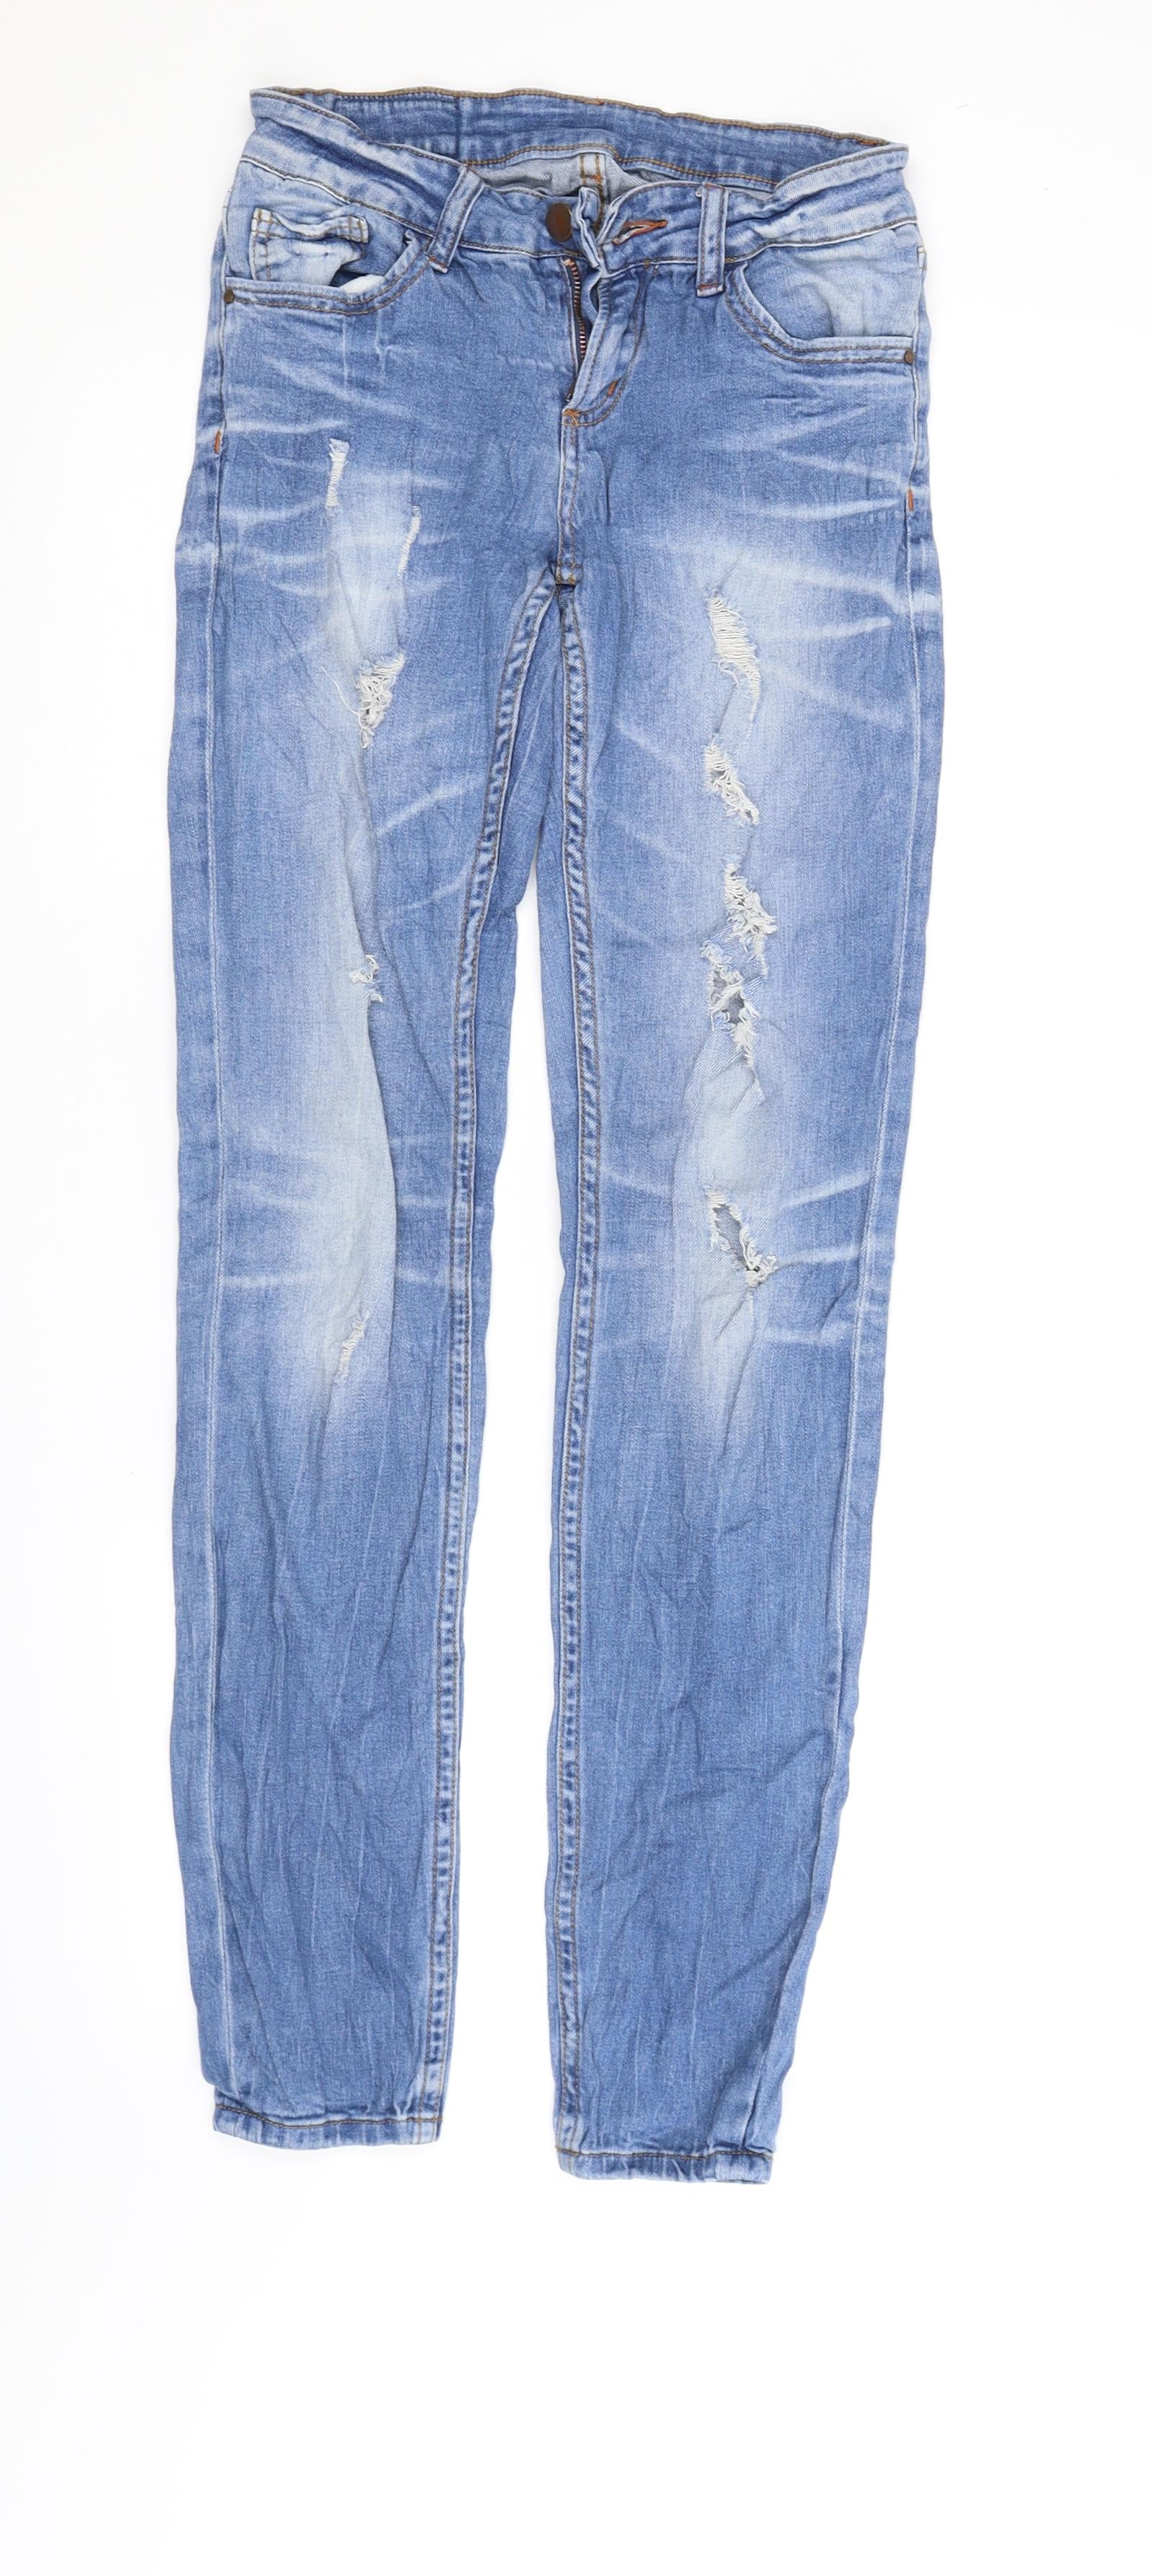 Amorous offentliggøre Bil Amisu Womens Blue Denim Straight Jeans Size 24 in L30 in Rewards - Monetha